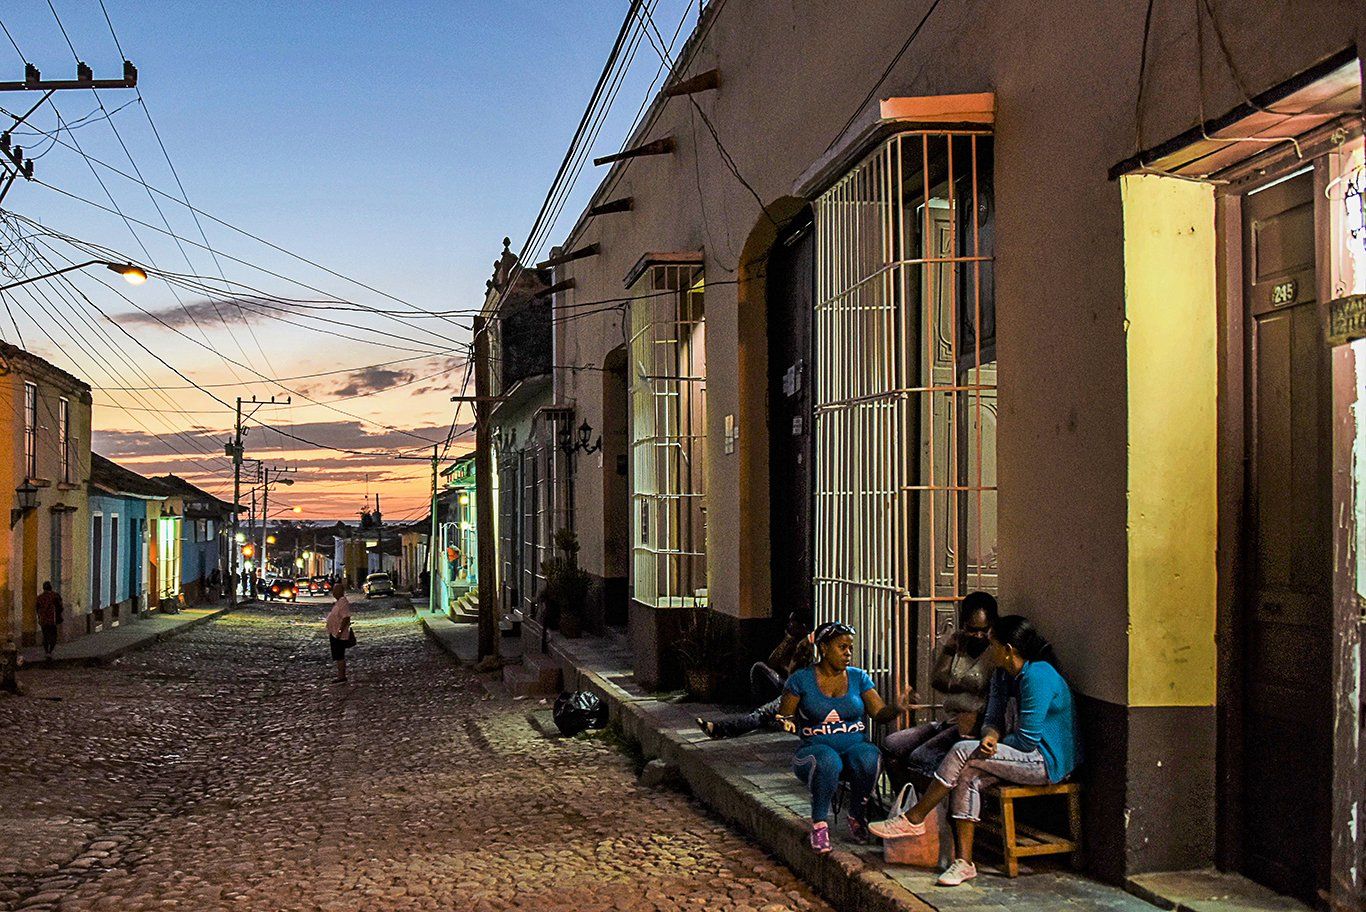 Havana and Trinidad Cuba Photo Gallery by David Ferguson